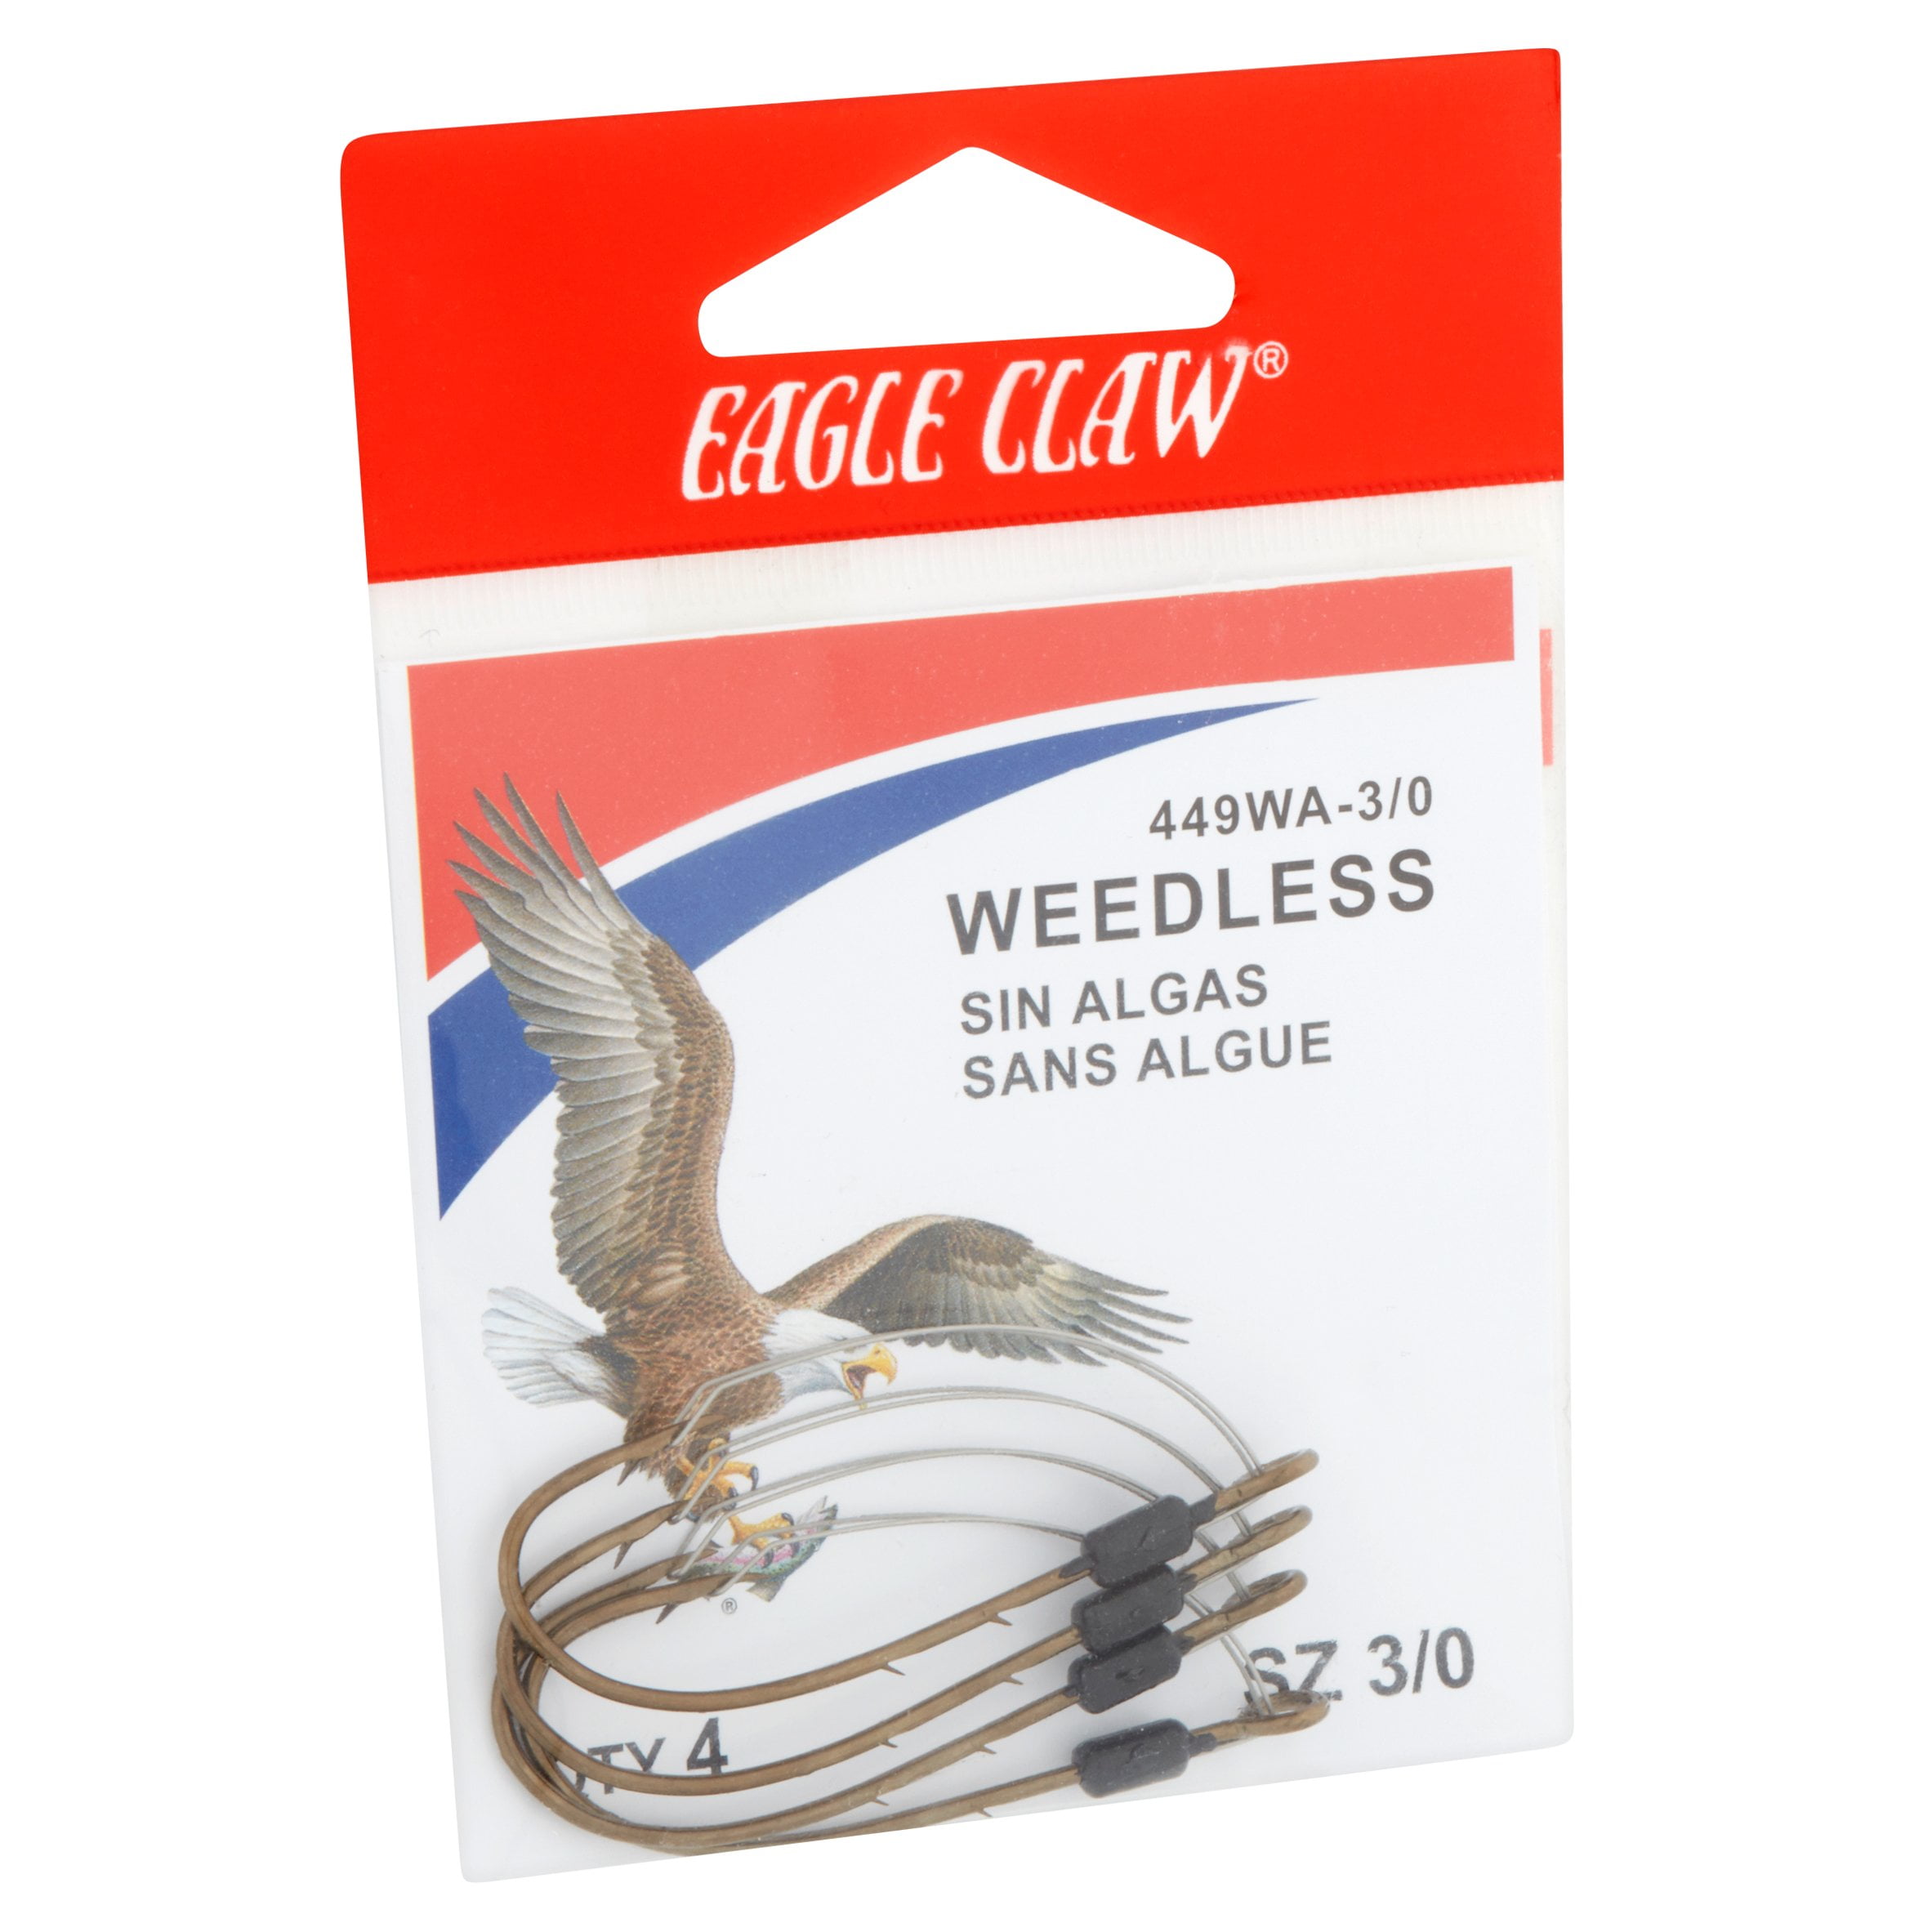 EAGLE CLAW L449WR WEEDLESS LAZER BAITHOLDER HOOK 5/pk- RED #1/0 